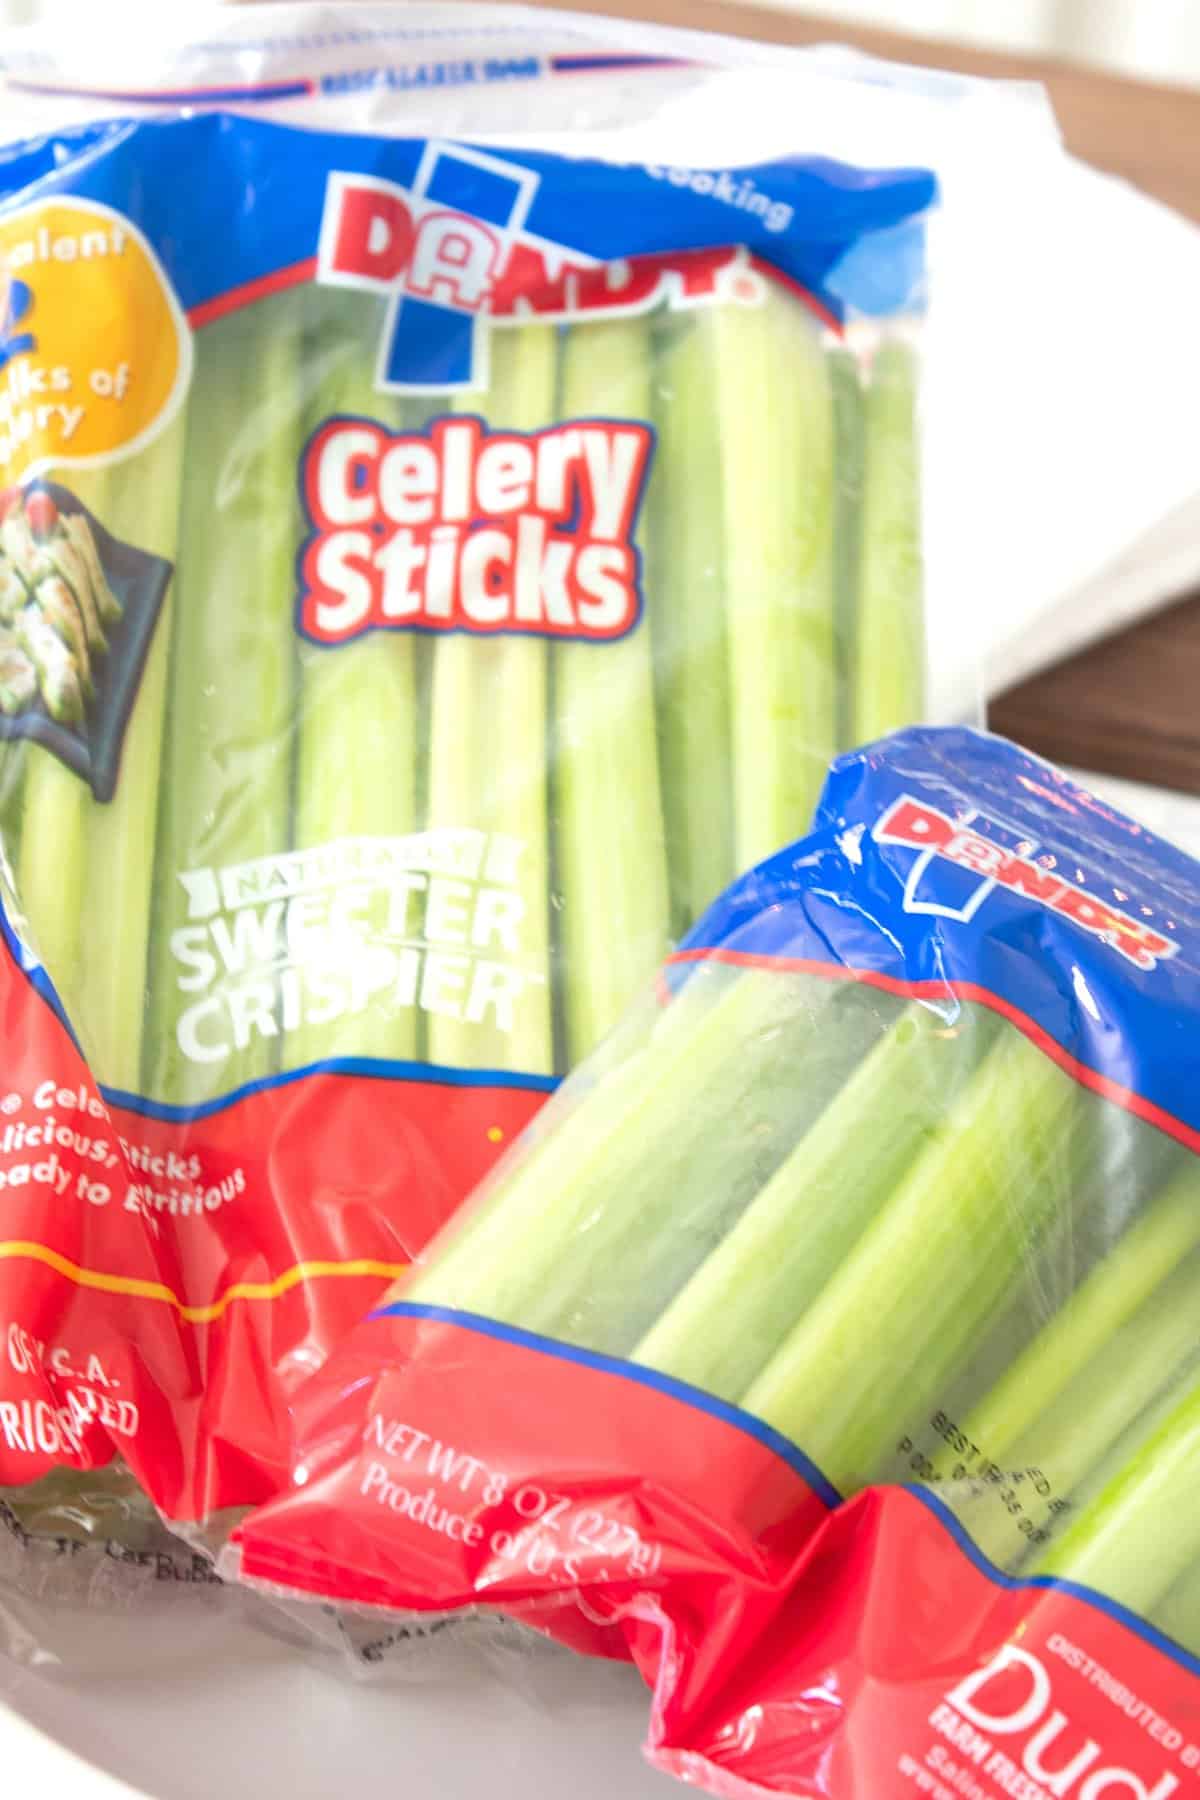 dandy celery sticks in a bag